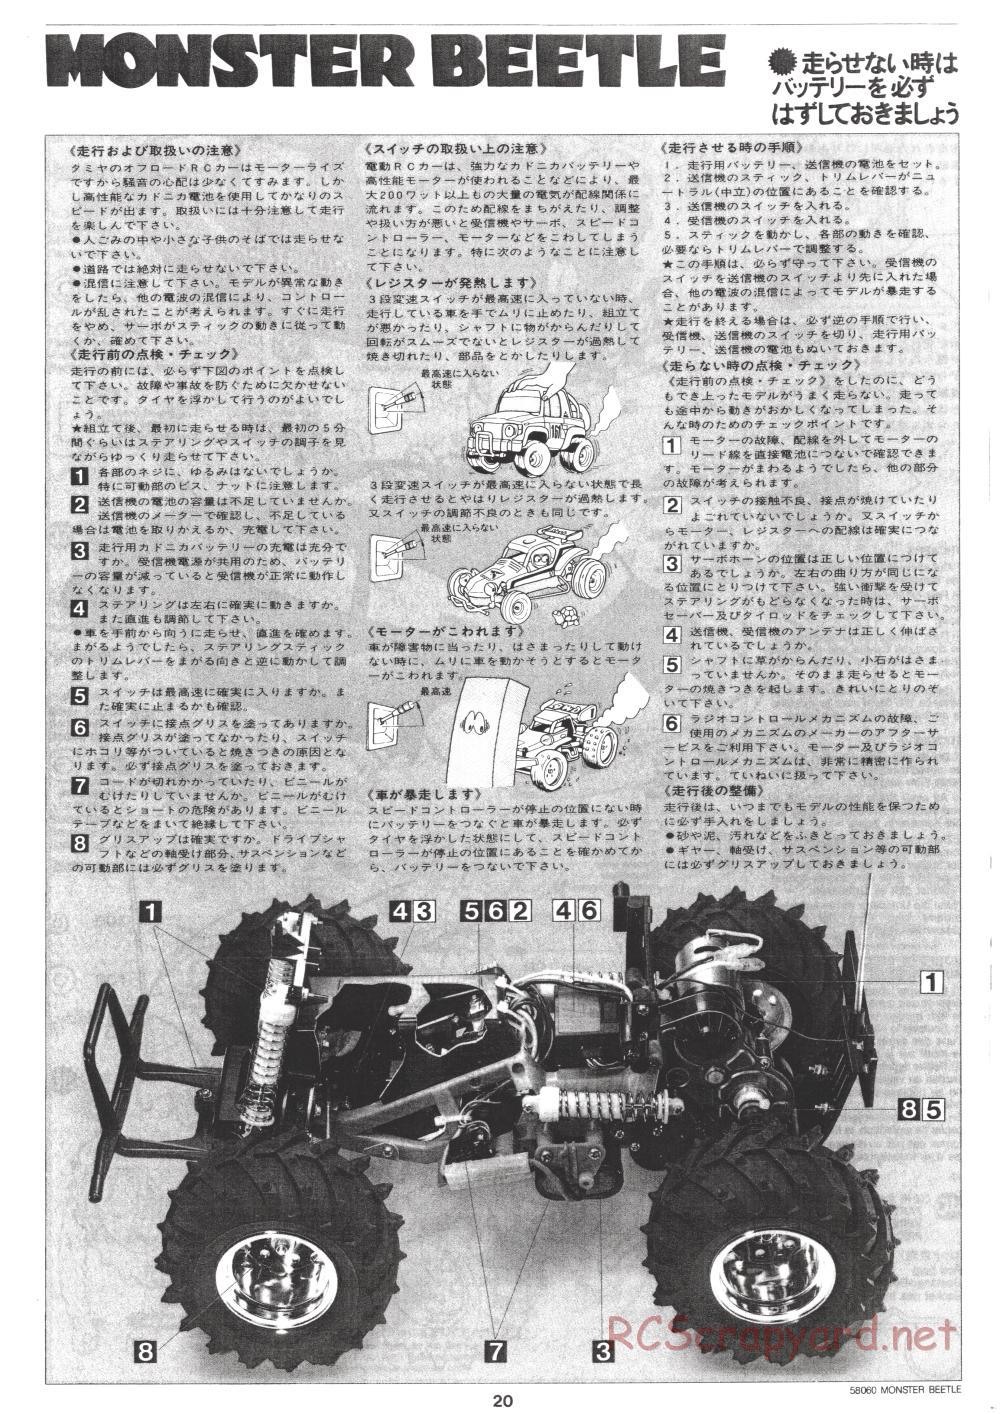 Tamiya - Monster Beetle - 58060 - Manual - Page 20